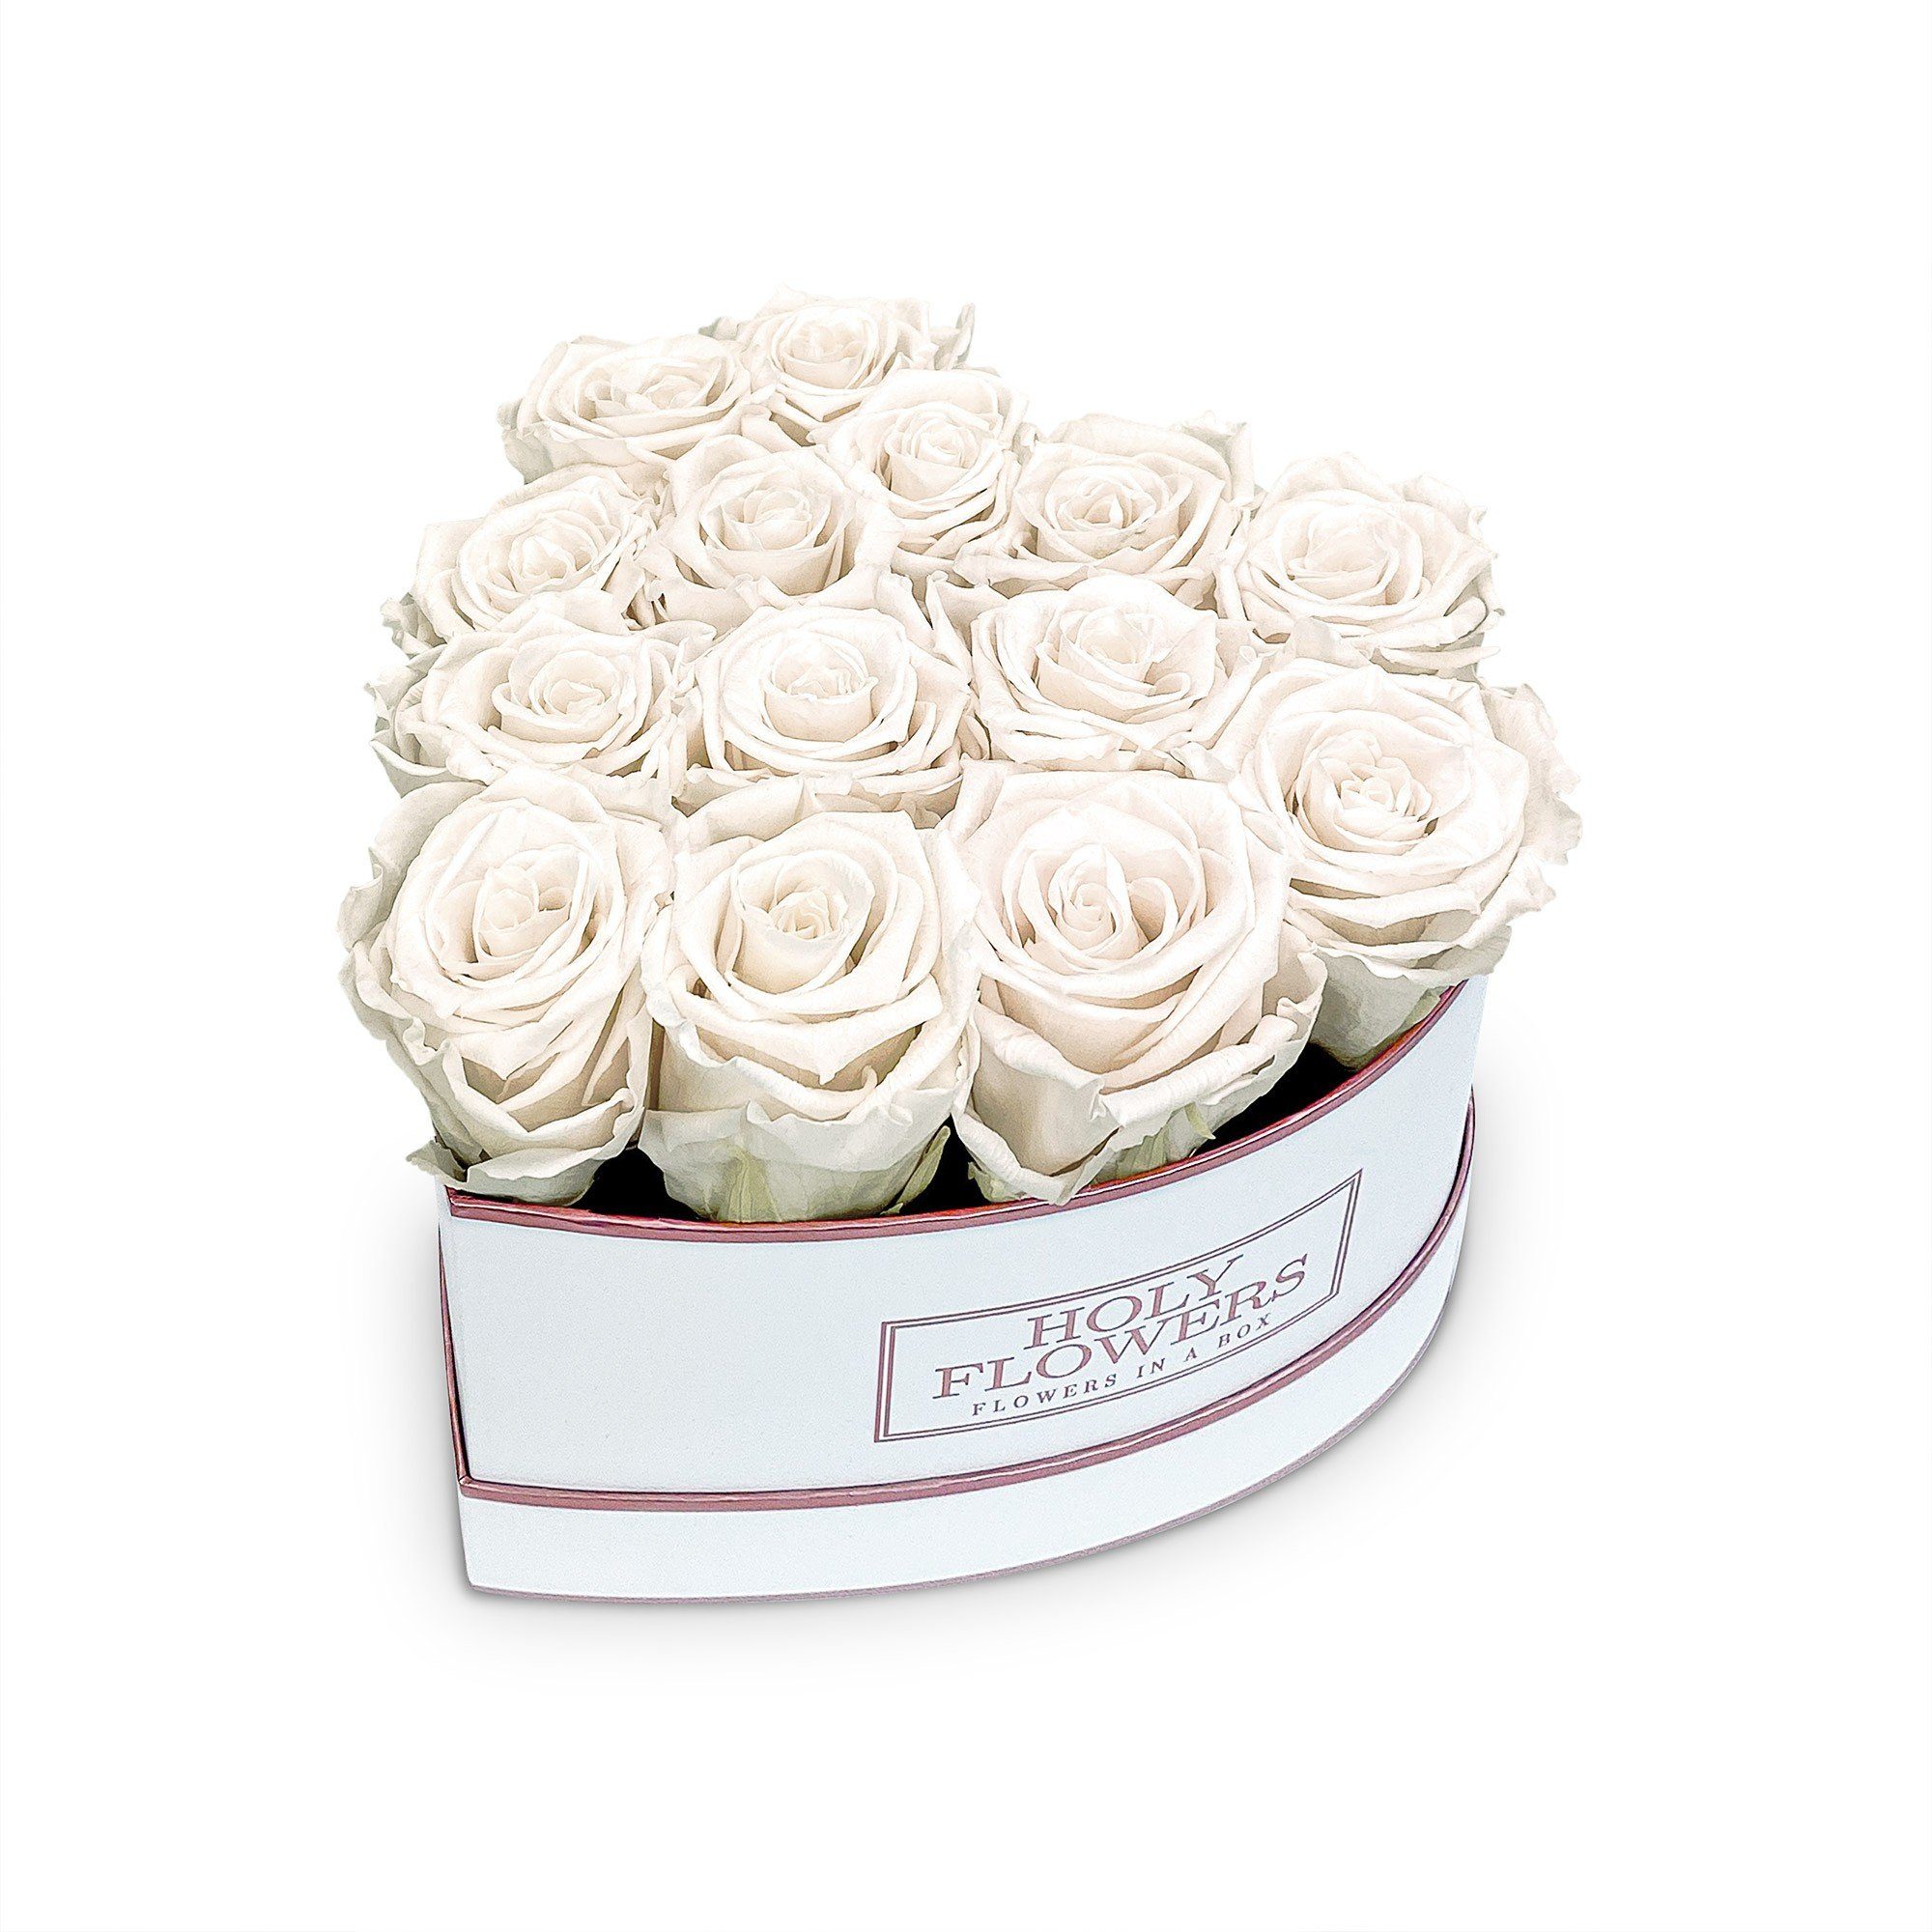 Kunstblume Rosenbox Großes Rosé Herz mit langlebigen Rosen I 3 Jahre haltbar I Echte, duftende konservierte Blumen Infinity Rose, Holy Flowers, Höhe 10 cm Holy White